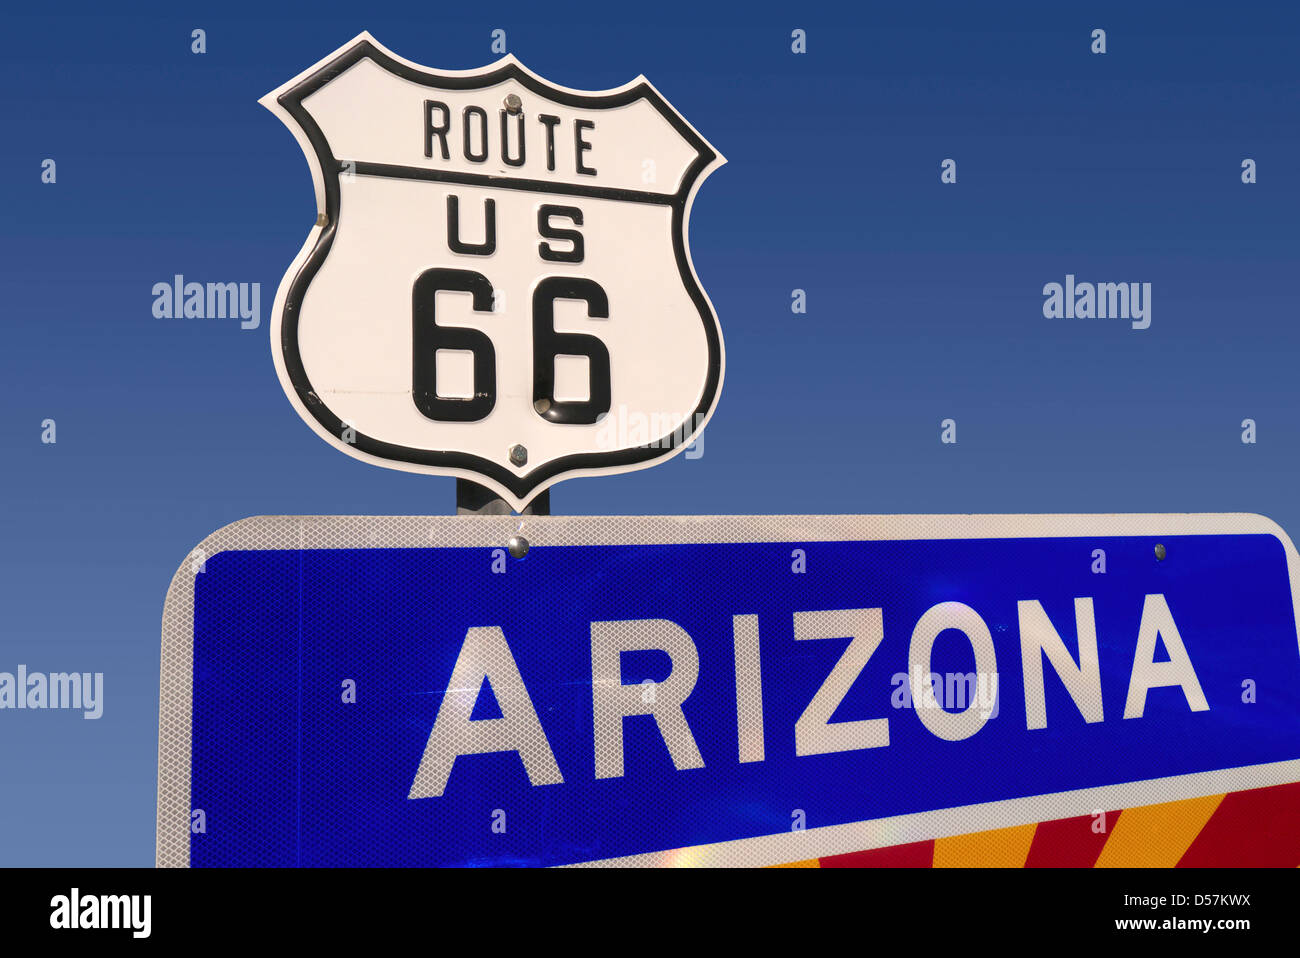 Route 66, Arizona Stock Photo